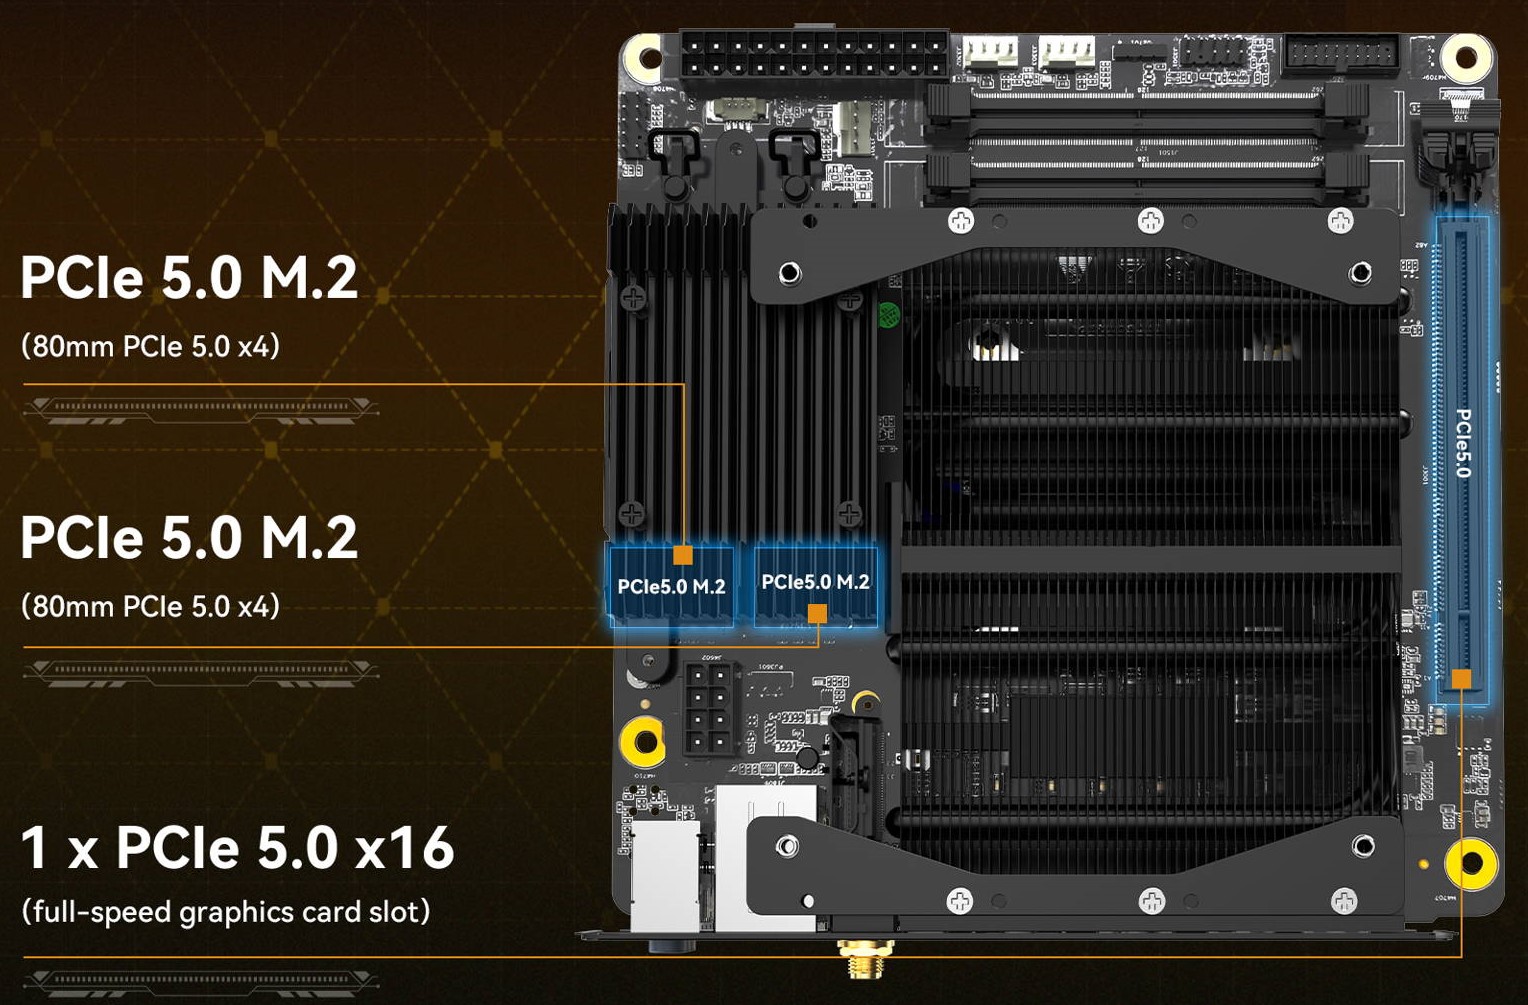 Minisforum BD770i Mini-ITX motherboard with AMD Ryzen 7 7745HX processor  launches at US$399 -  News